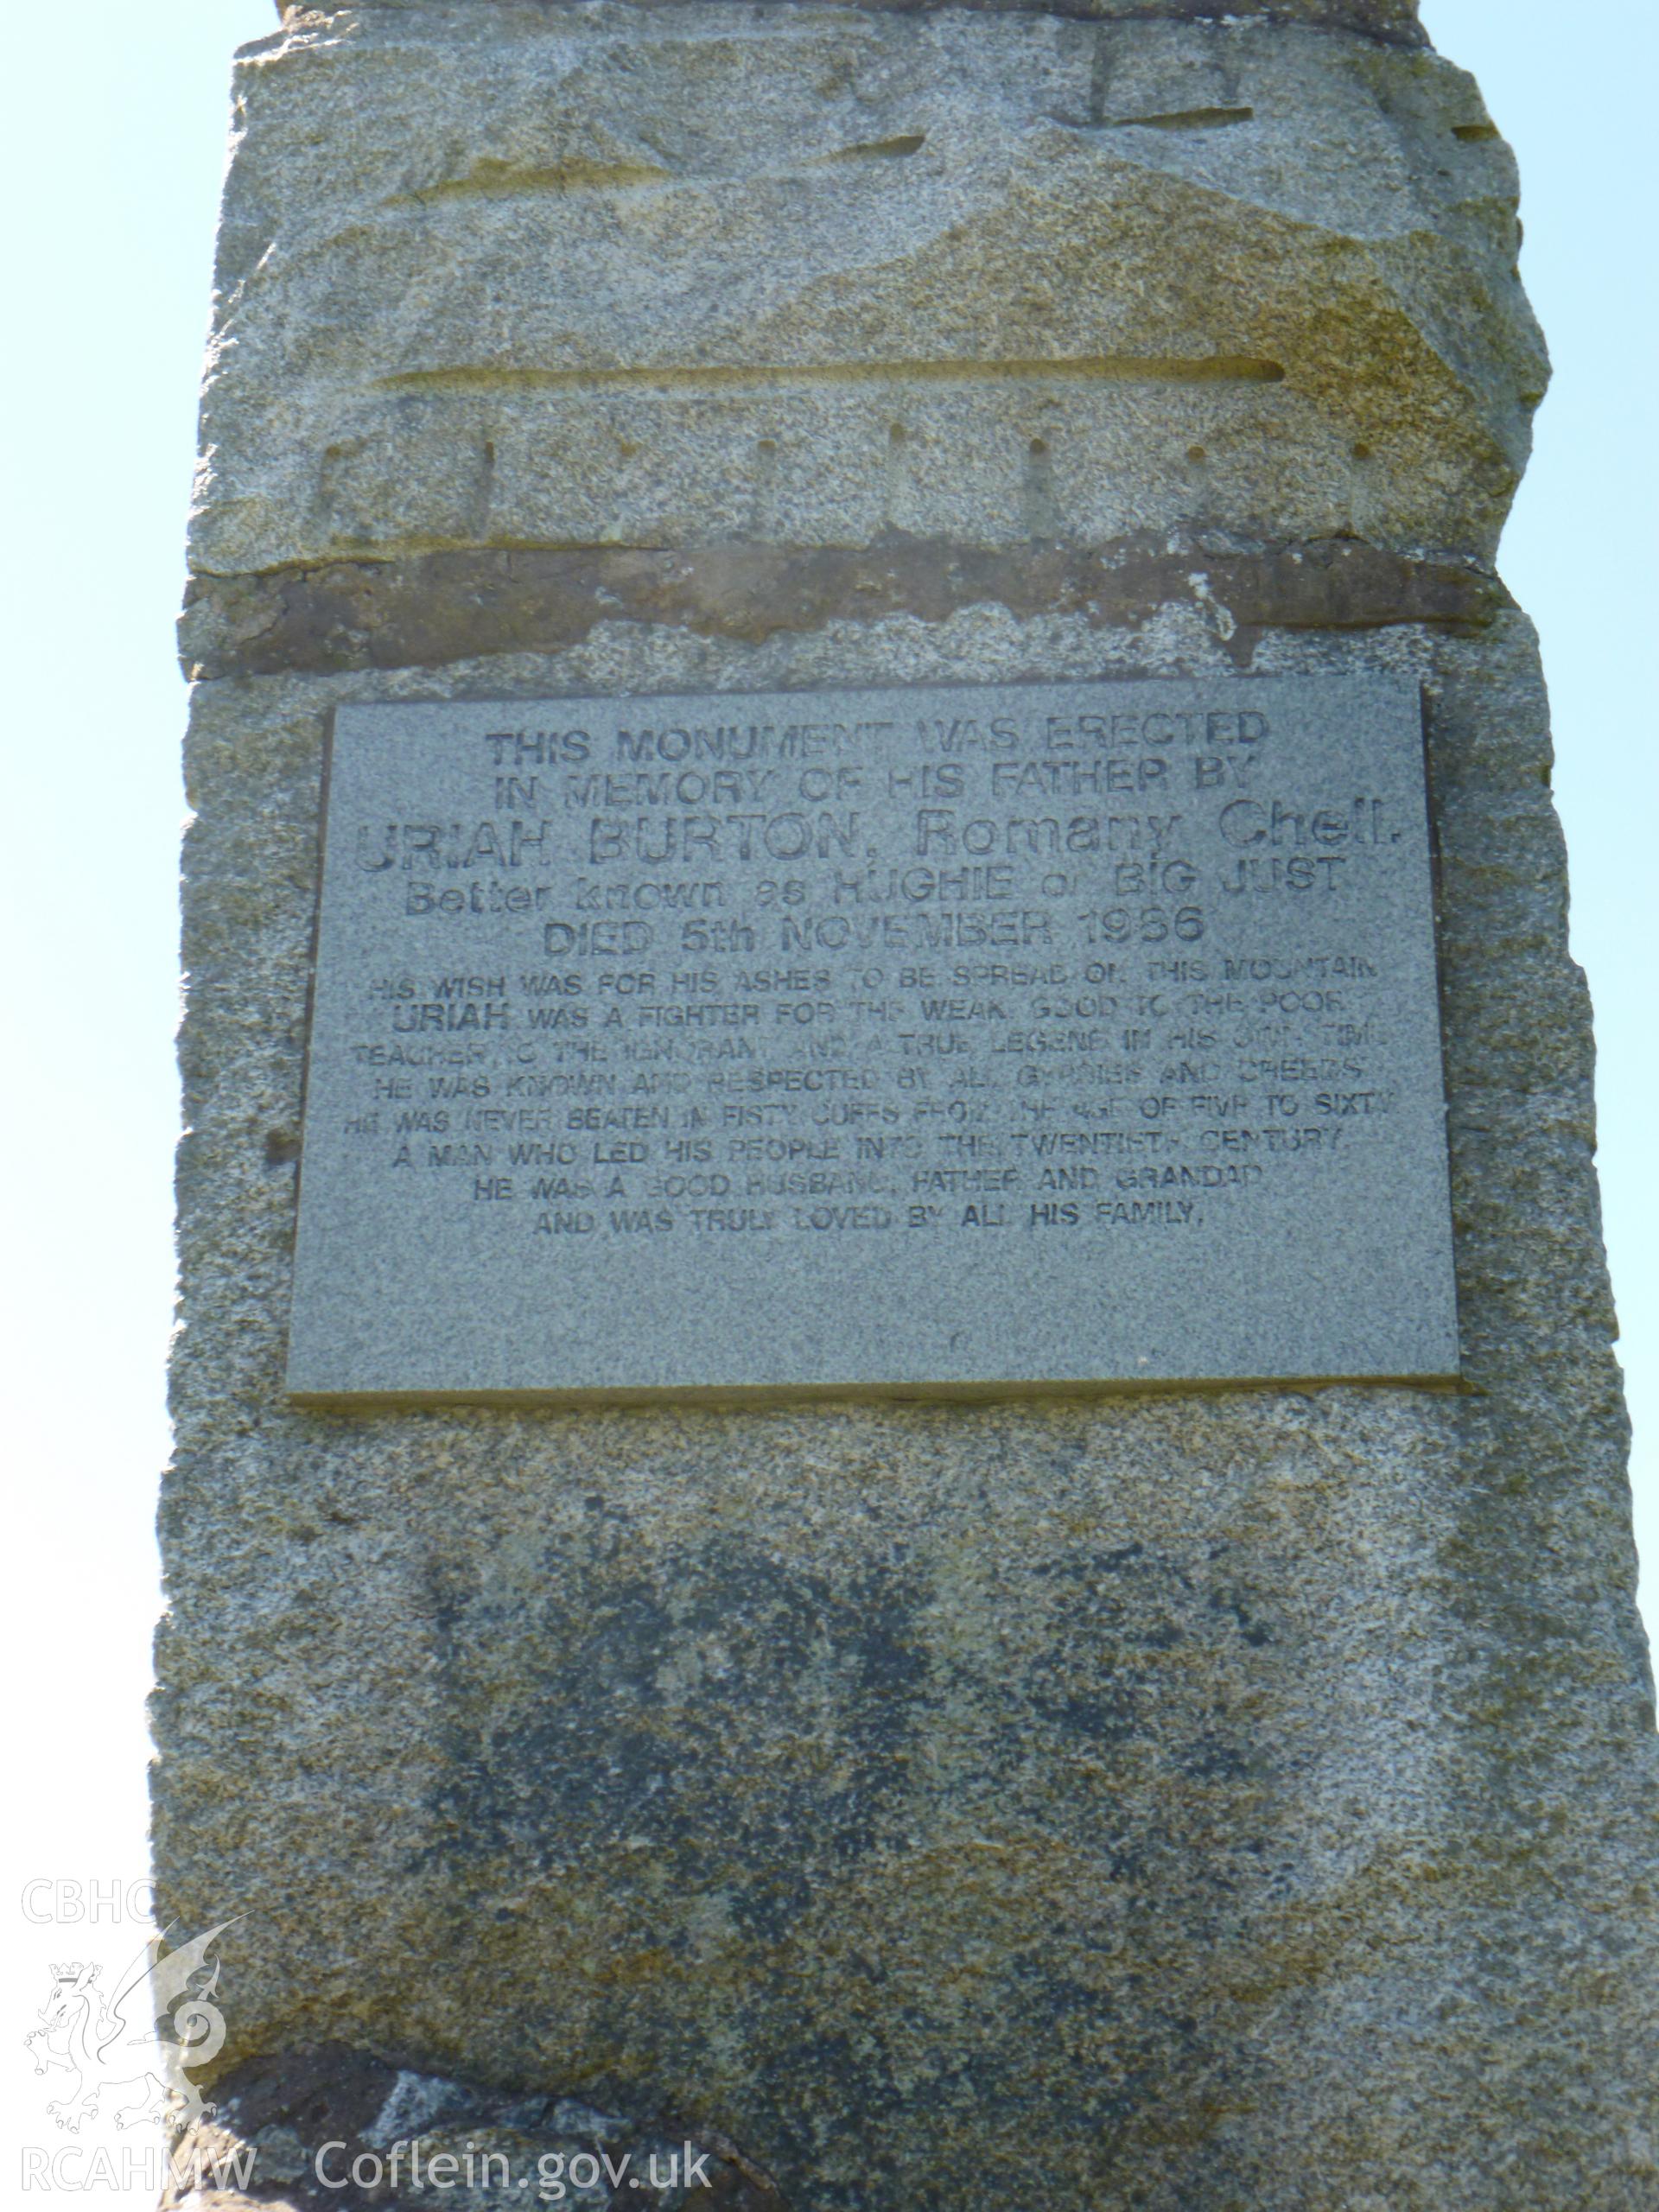 Memorial inscription to Uriah Burton, son of Ernest, who died 5th November, 1986.